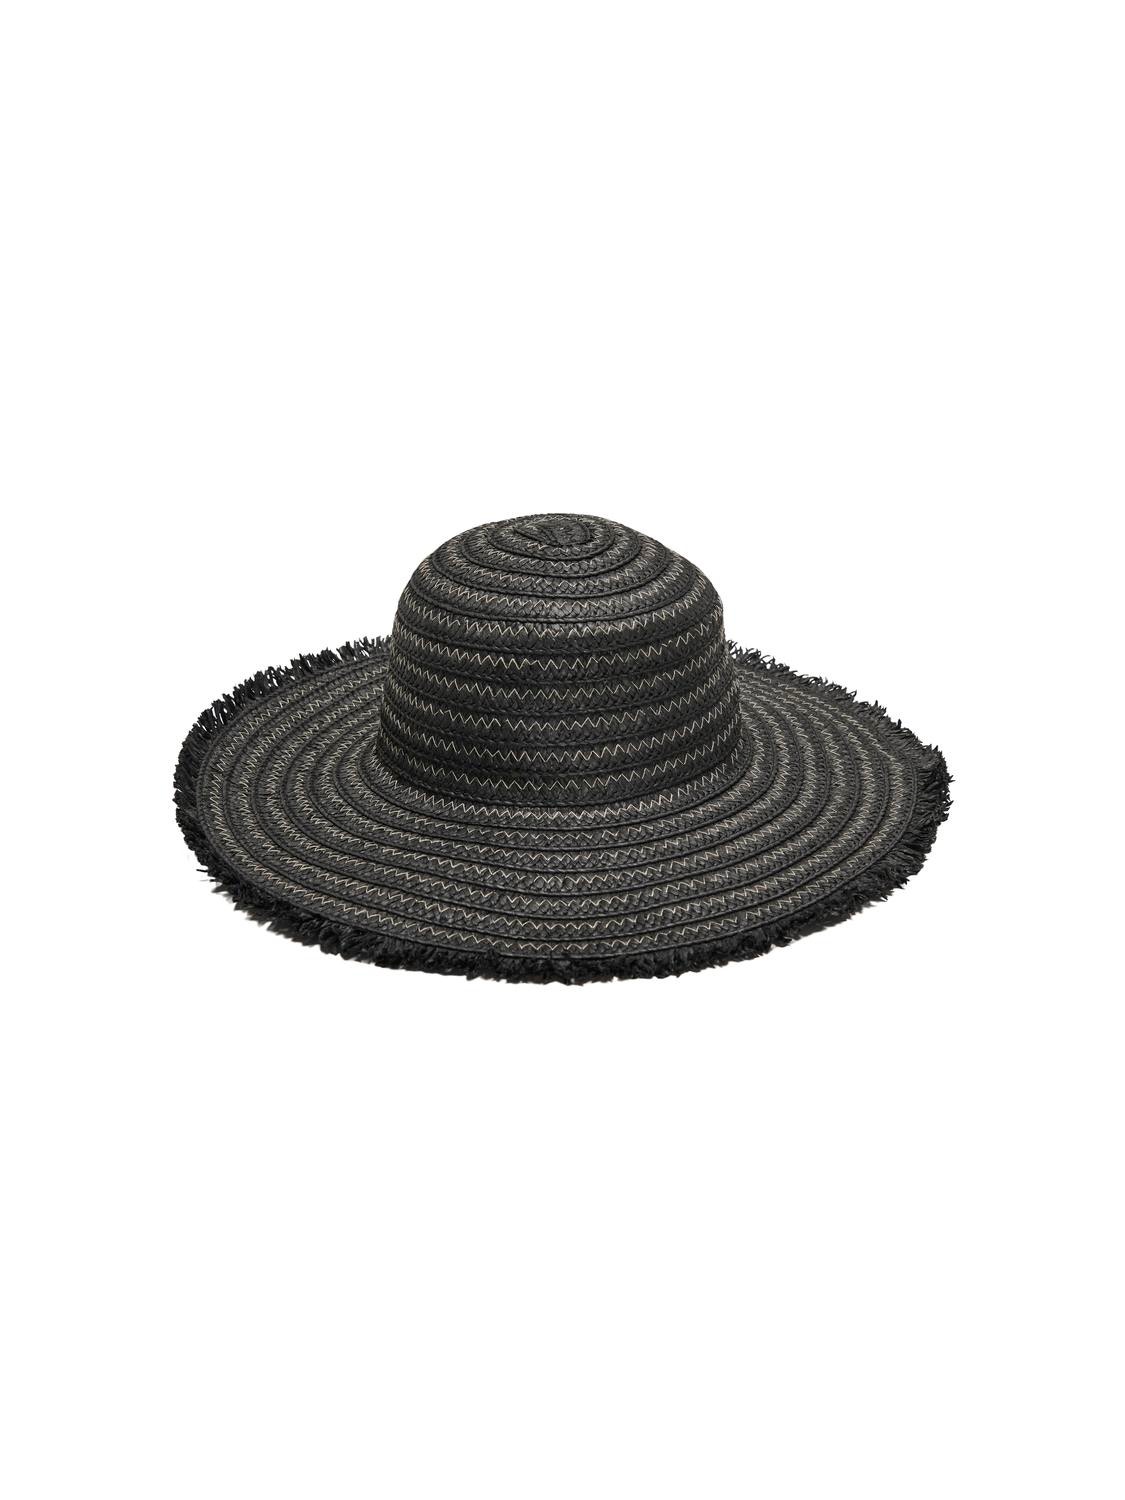 ONLY Straw sun hat -Black - 15313312